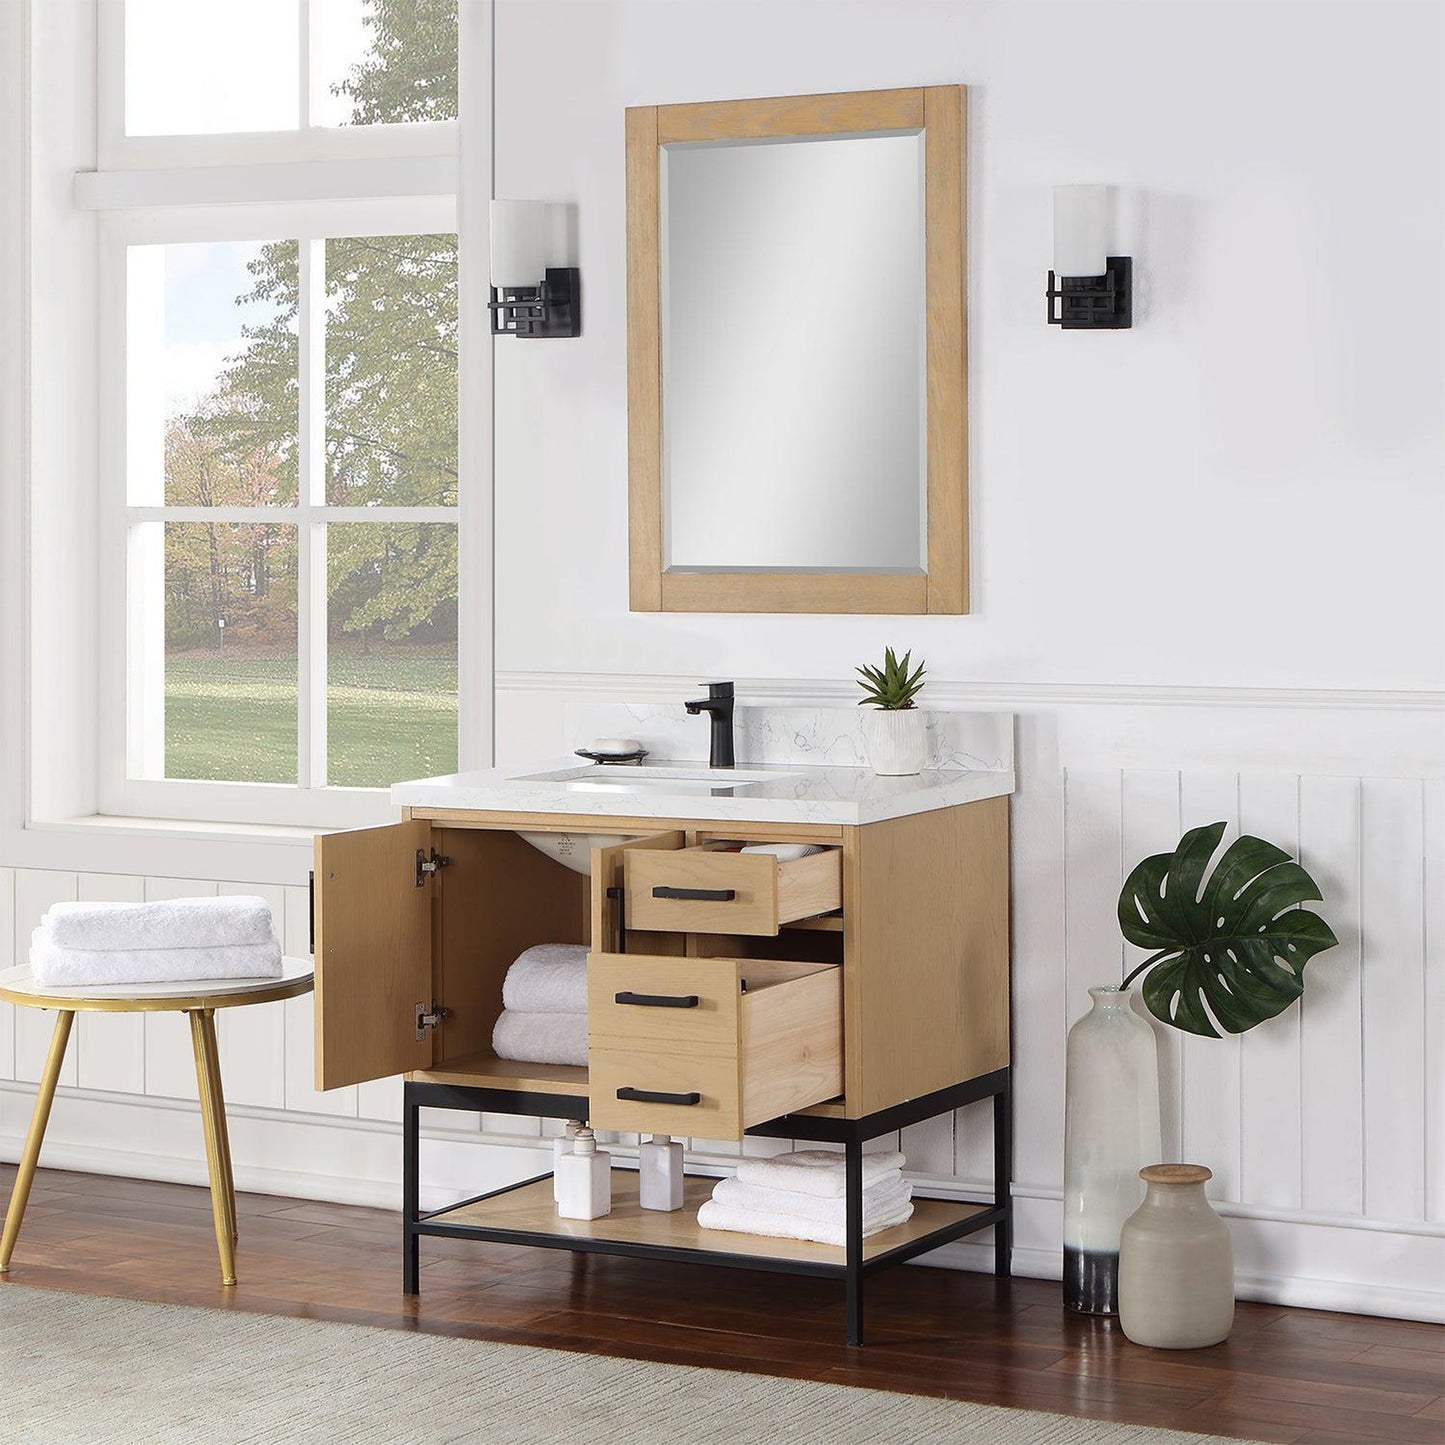 Altair Wildy 36" Washed Oak Freestanding Single Bathroom Vanity Set With Mirror, Stylish Composite Grain White Stone Top, Rectangular Undermount Ceramic Sink, Overflow, and Backsplash